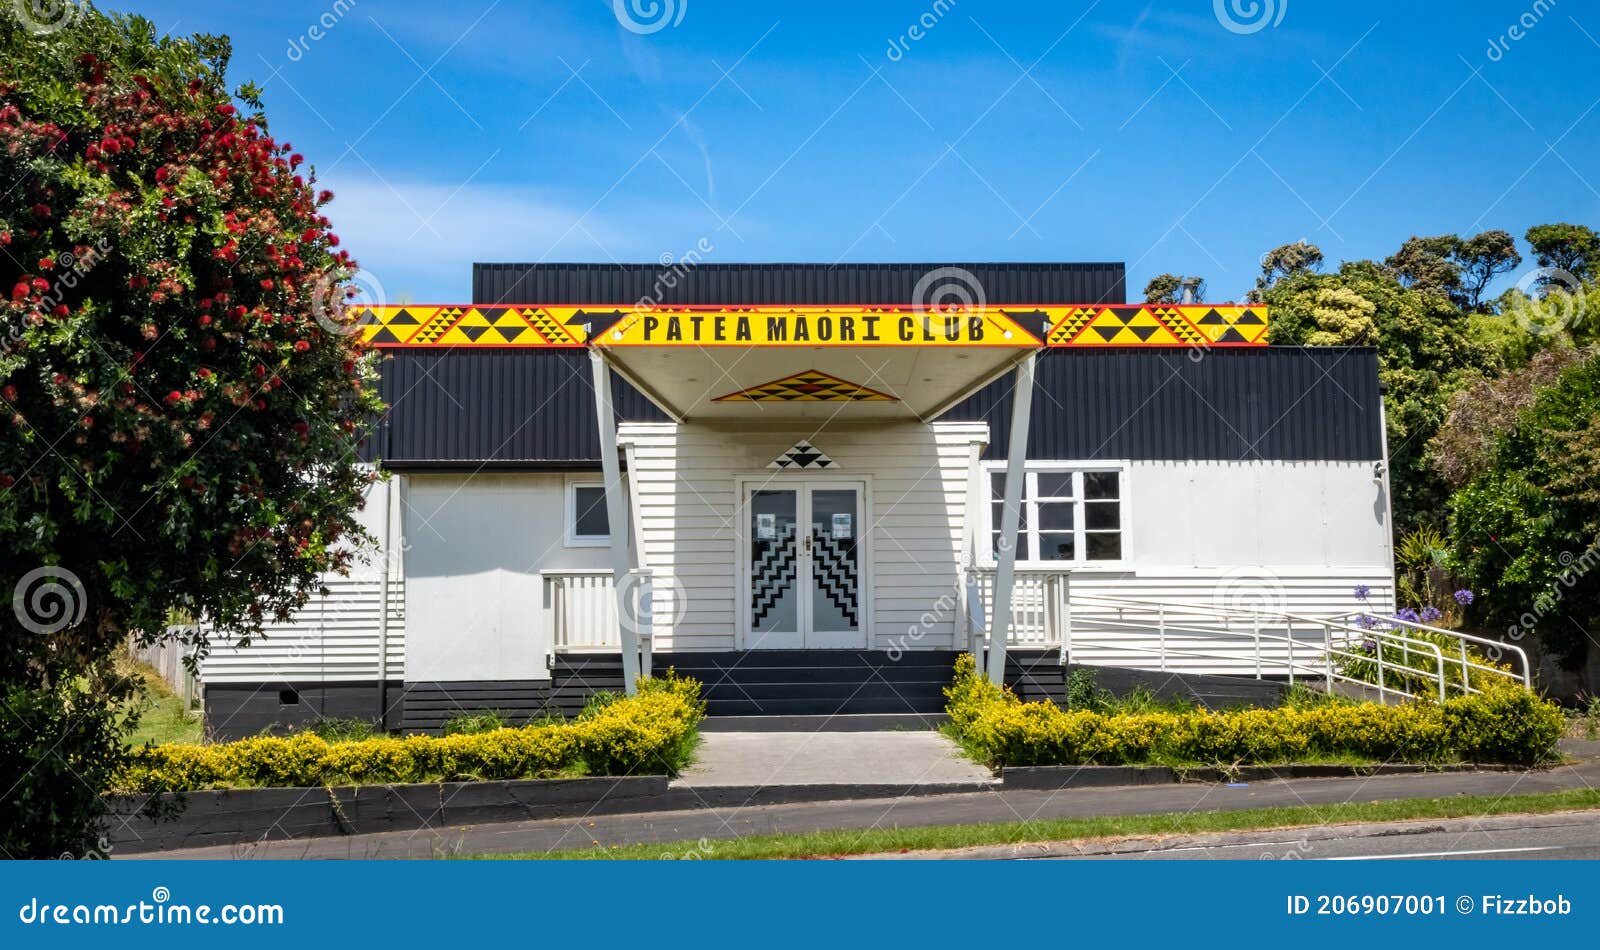 Street View of Patea Maori Club Building, Patea, Taranaki, NZ, 2021  Editorial Photo - Image of icon, gardens: 206907001